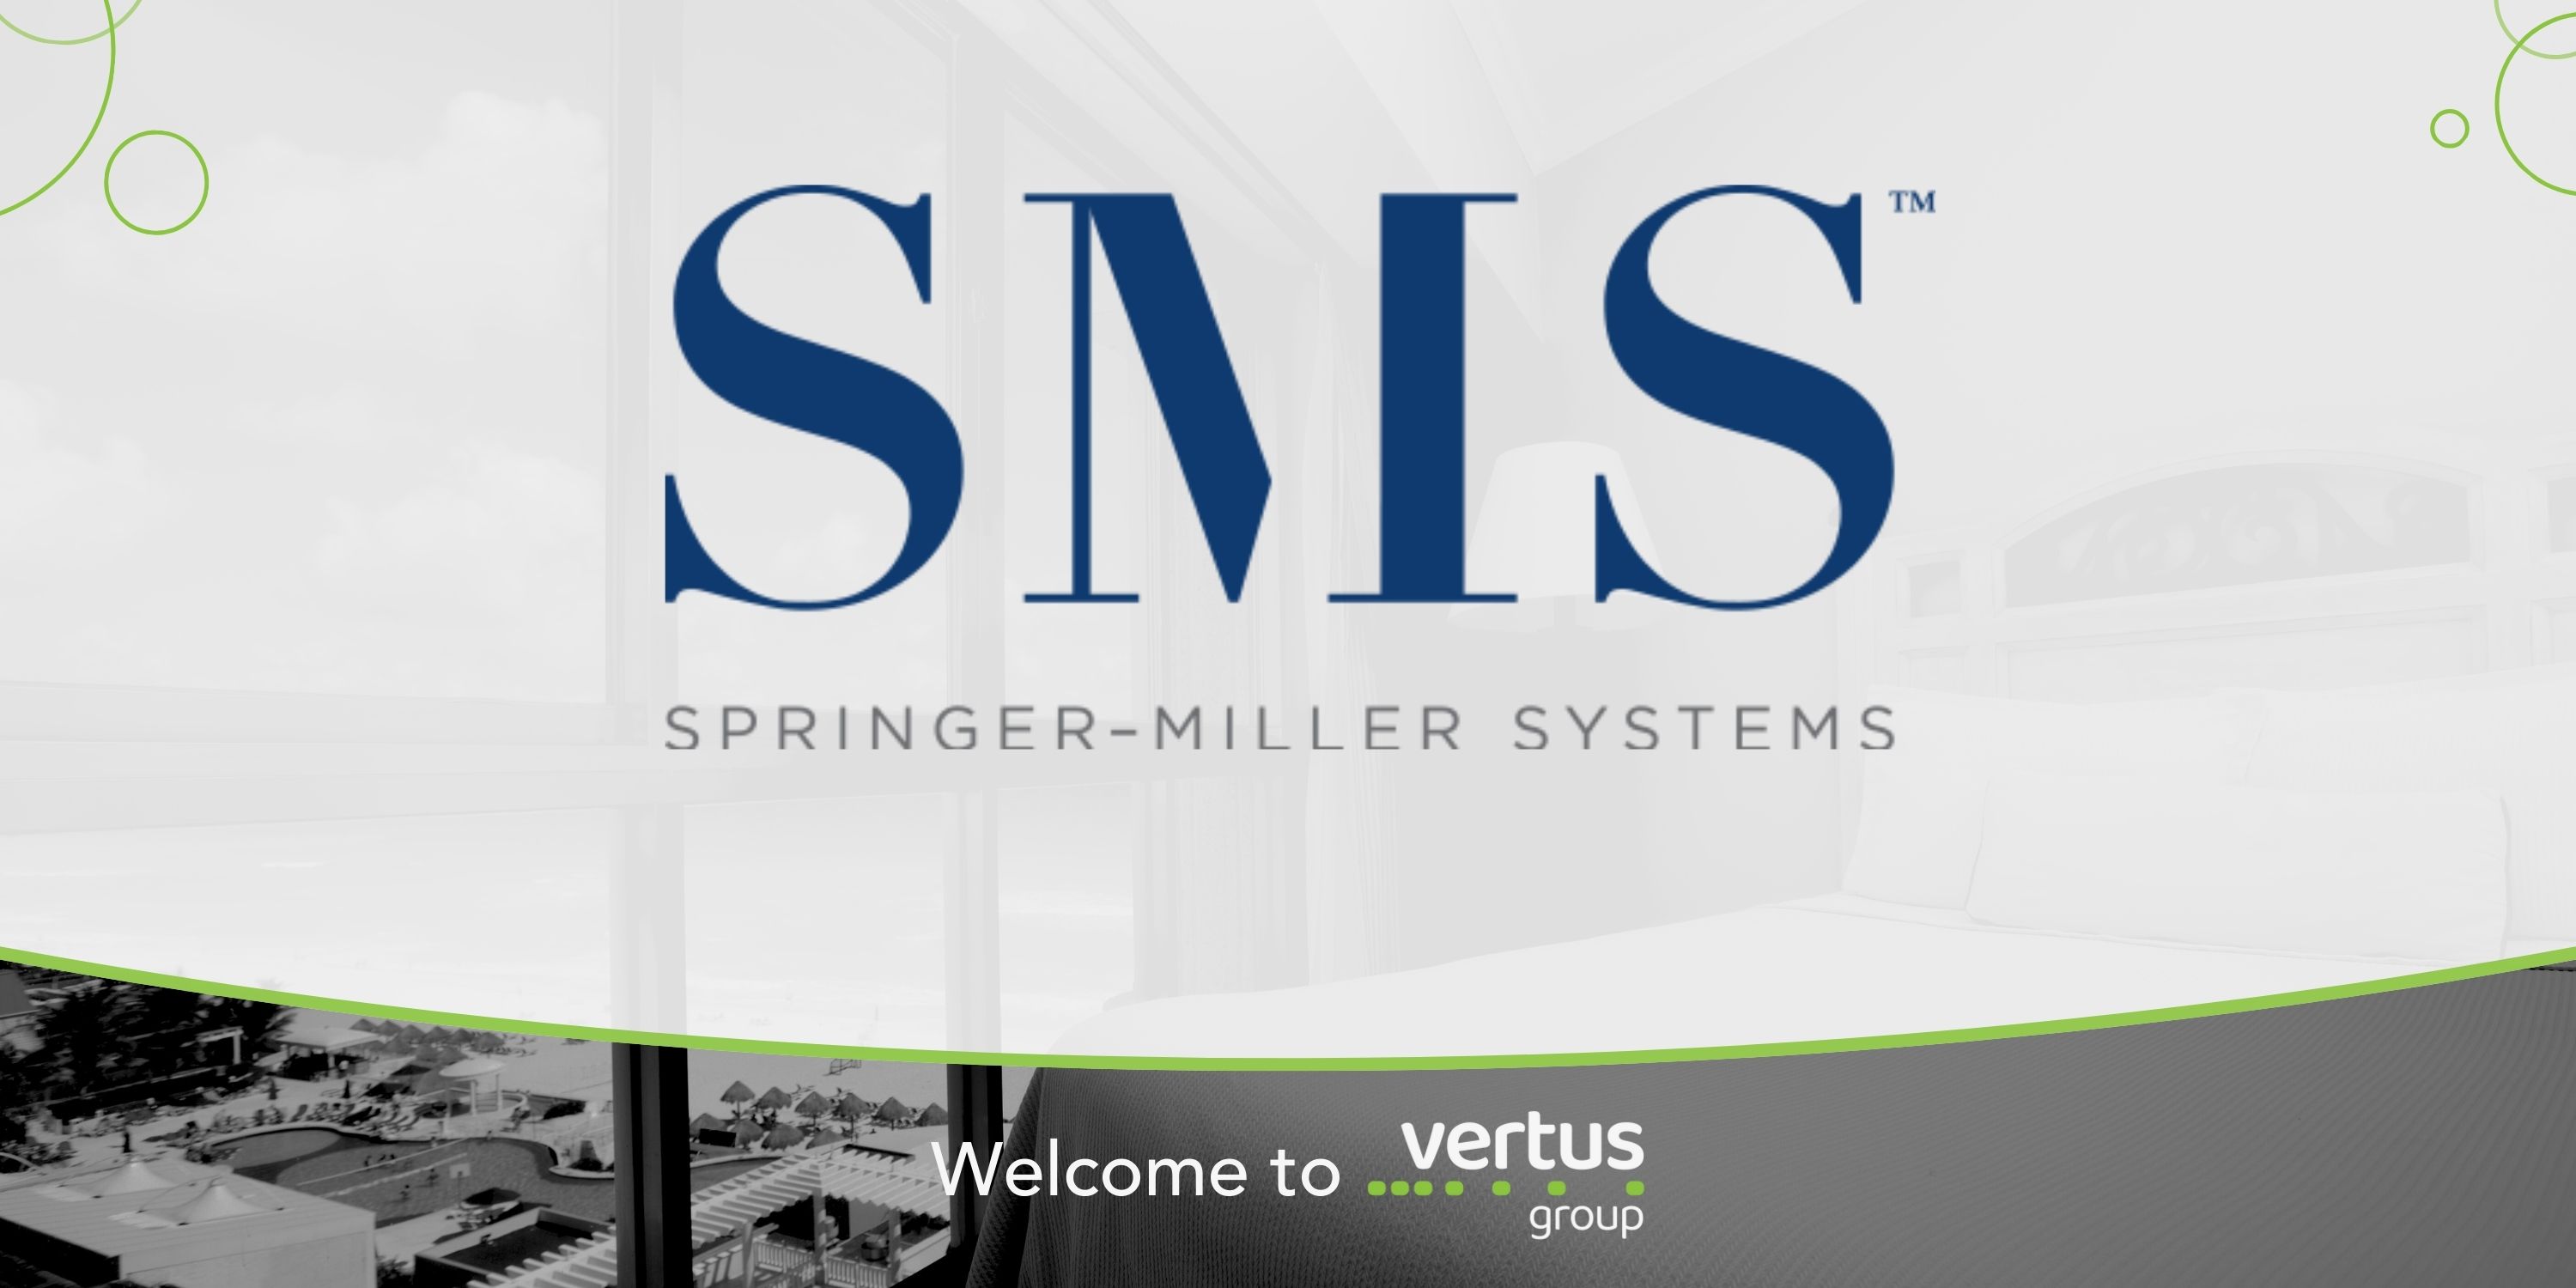 Acquisition: Springer Miller Systems